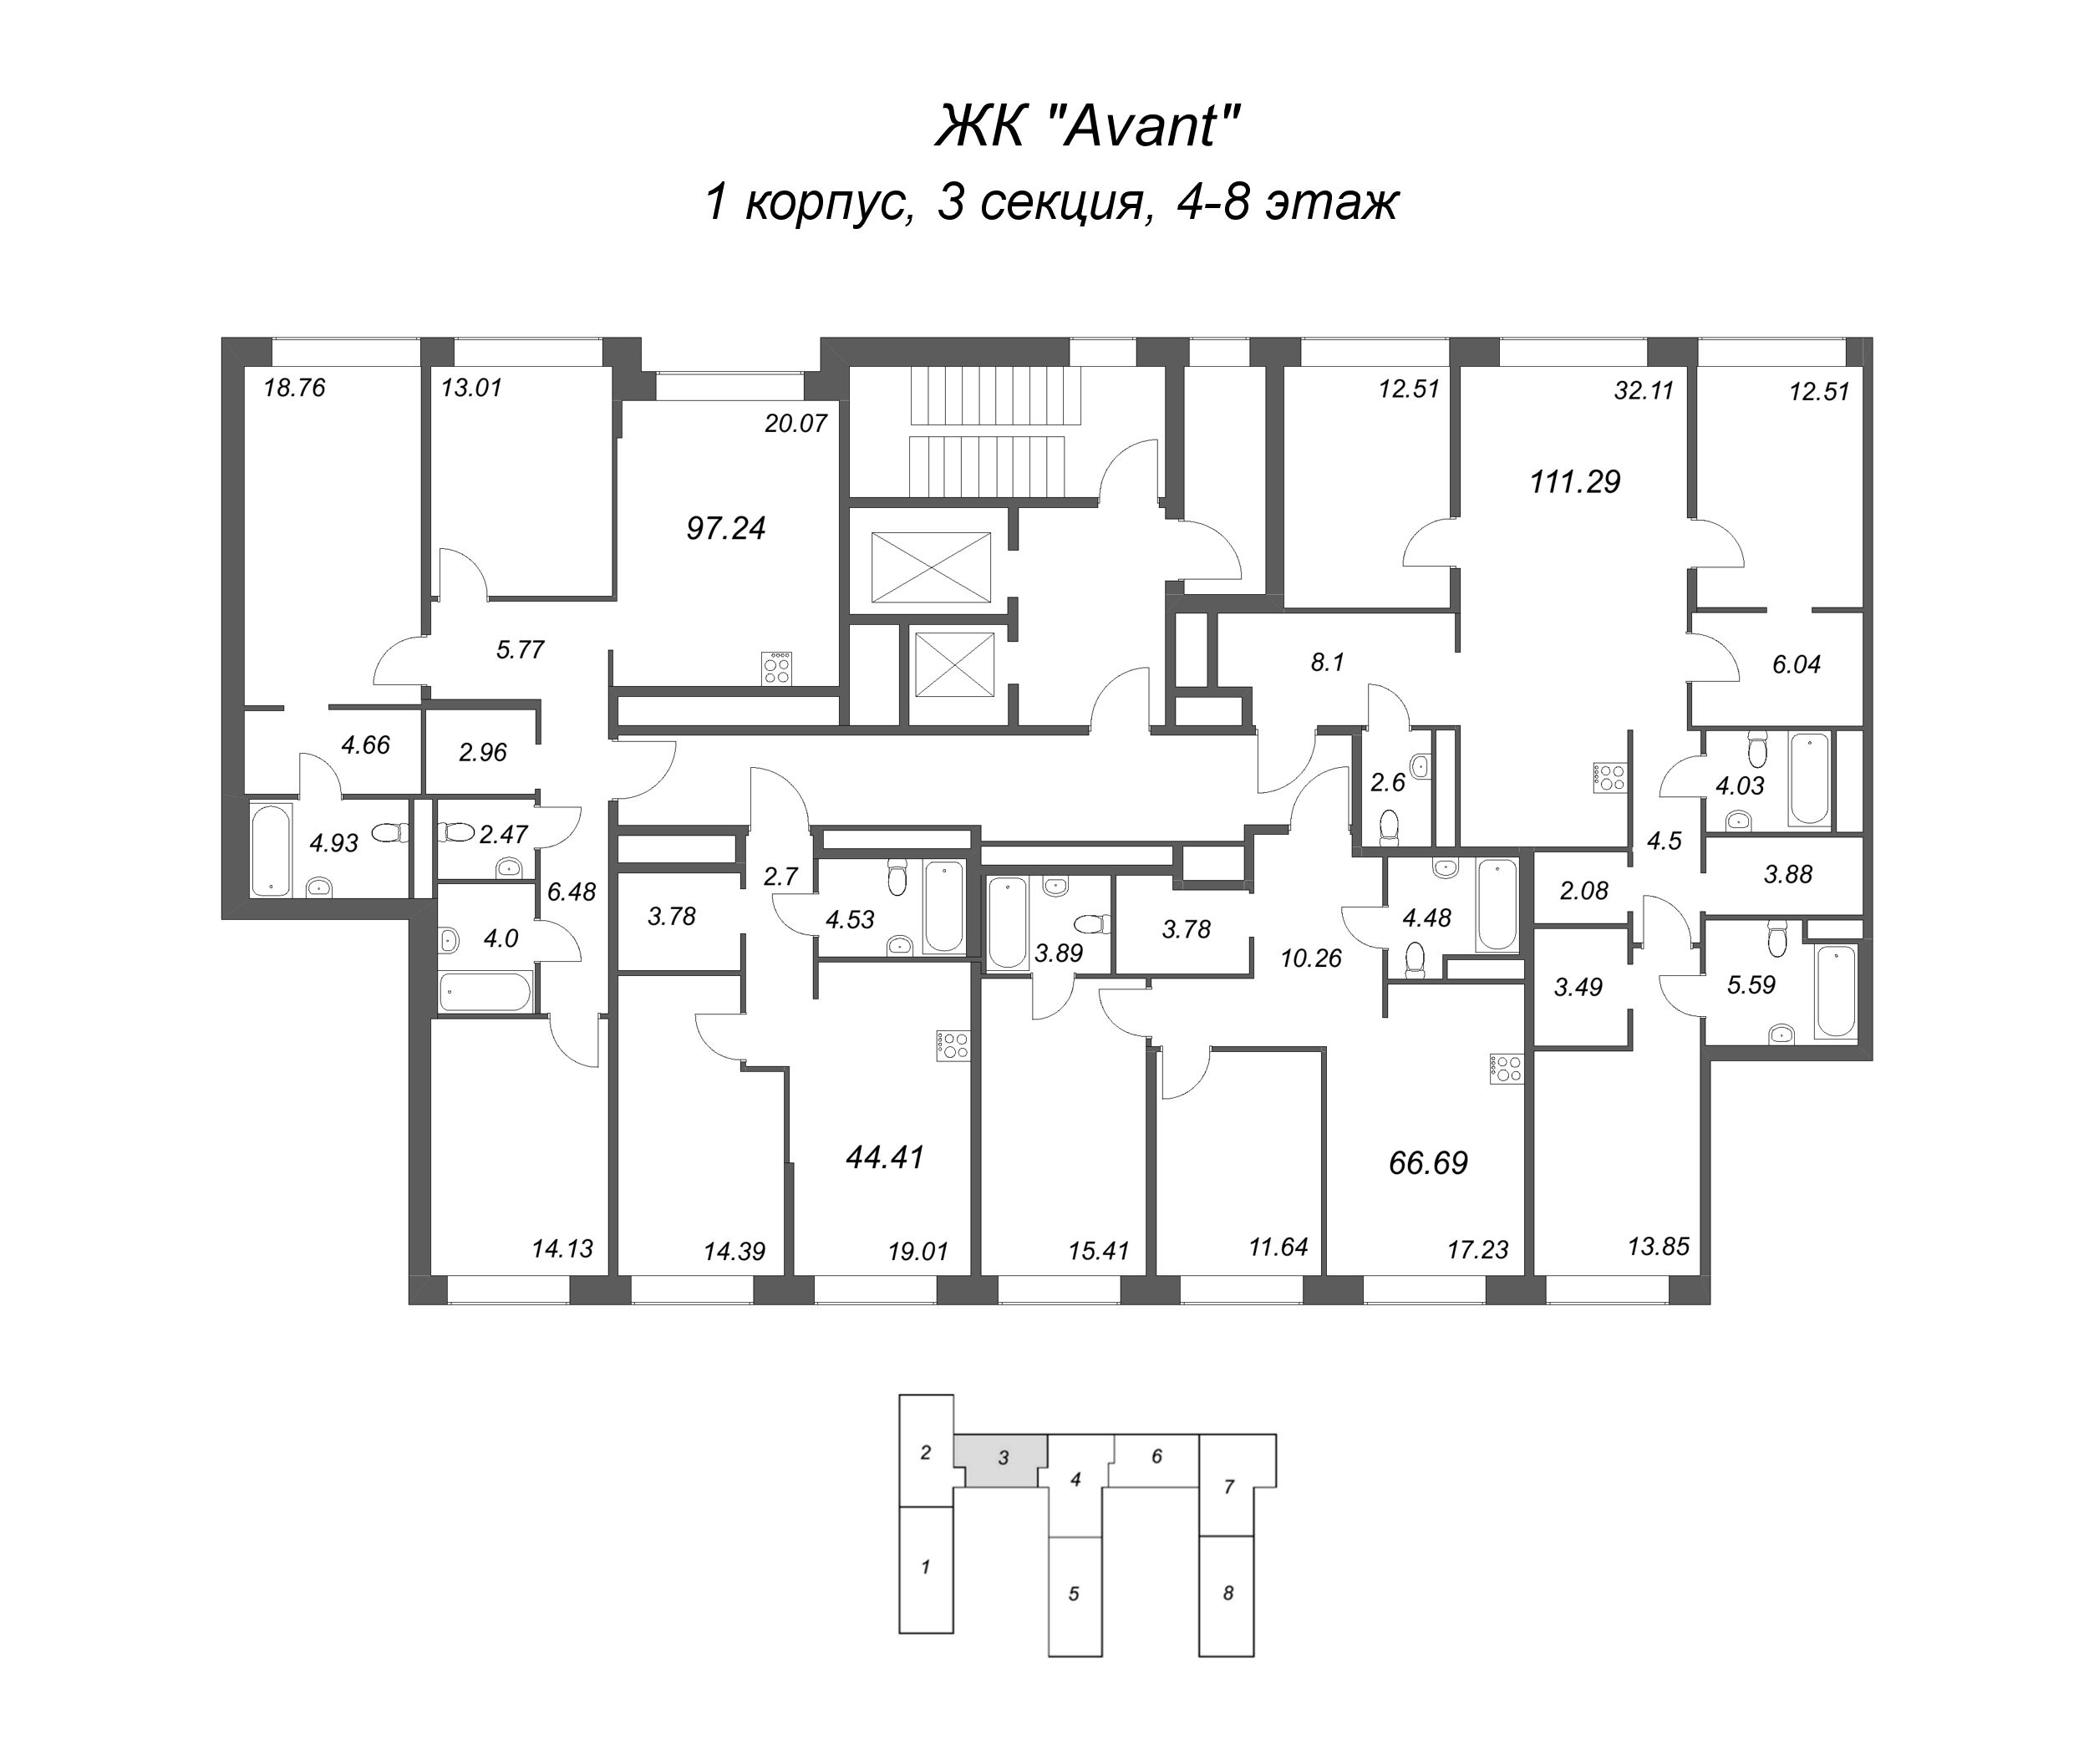 2-комнатная (Евро) квартира, 44.41 м² в ЖК "Avant" - планировка этажа